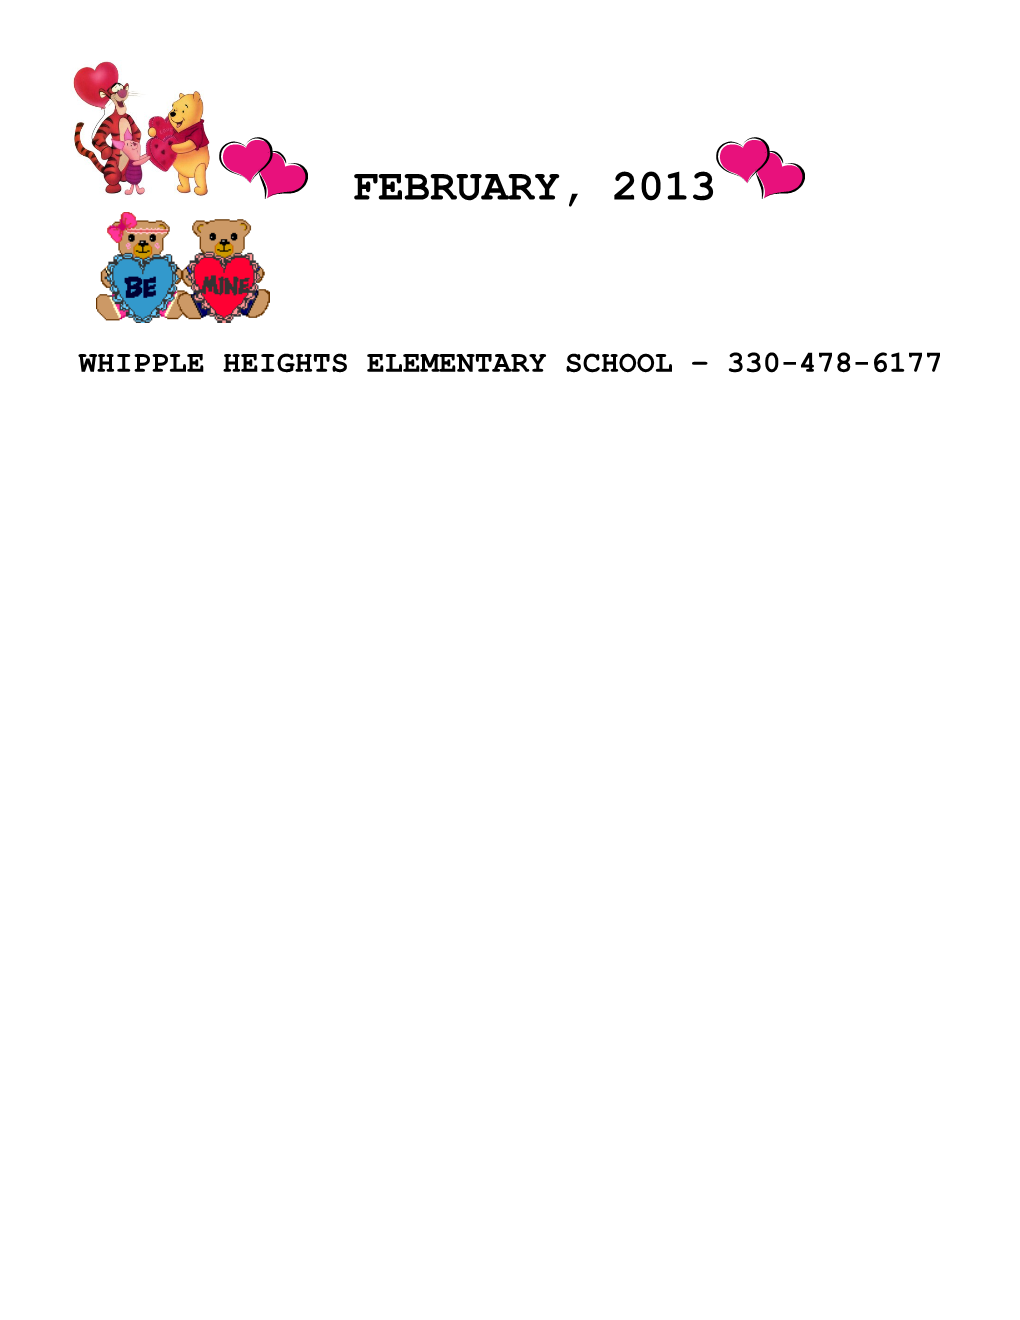 Whipple Heights Elementary School 330-478-6177